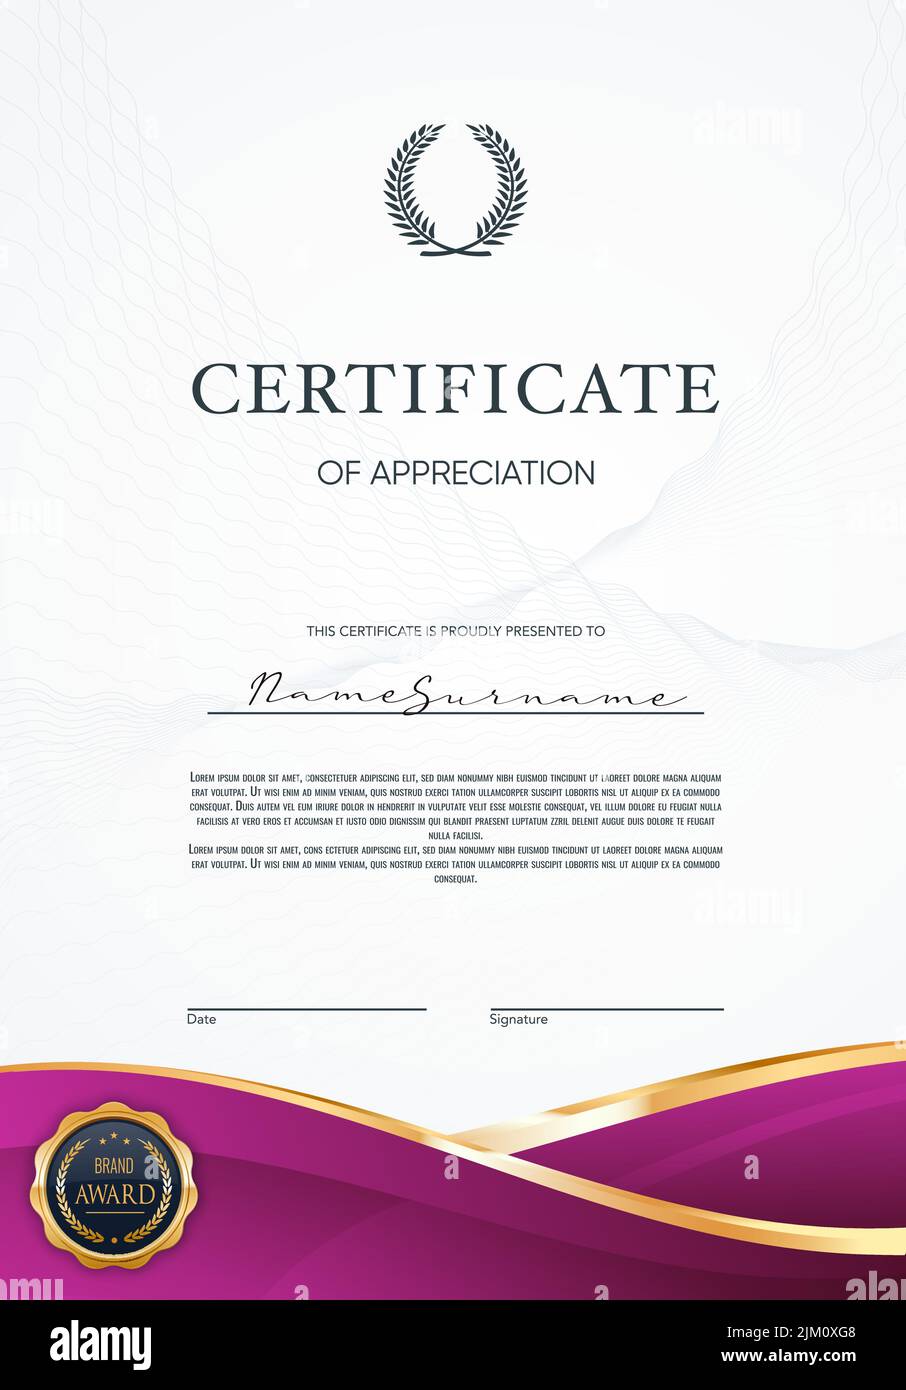 Award certificate, appreciation diploma template, vector achievement honor with golden seal. Certificate of appreciation, business or education achiev Stock Vector